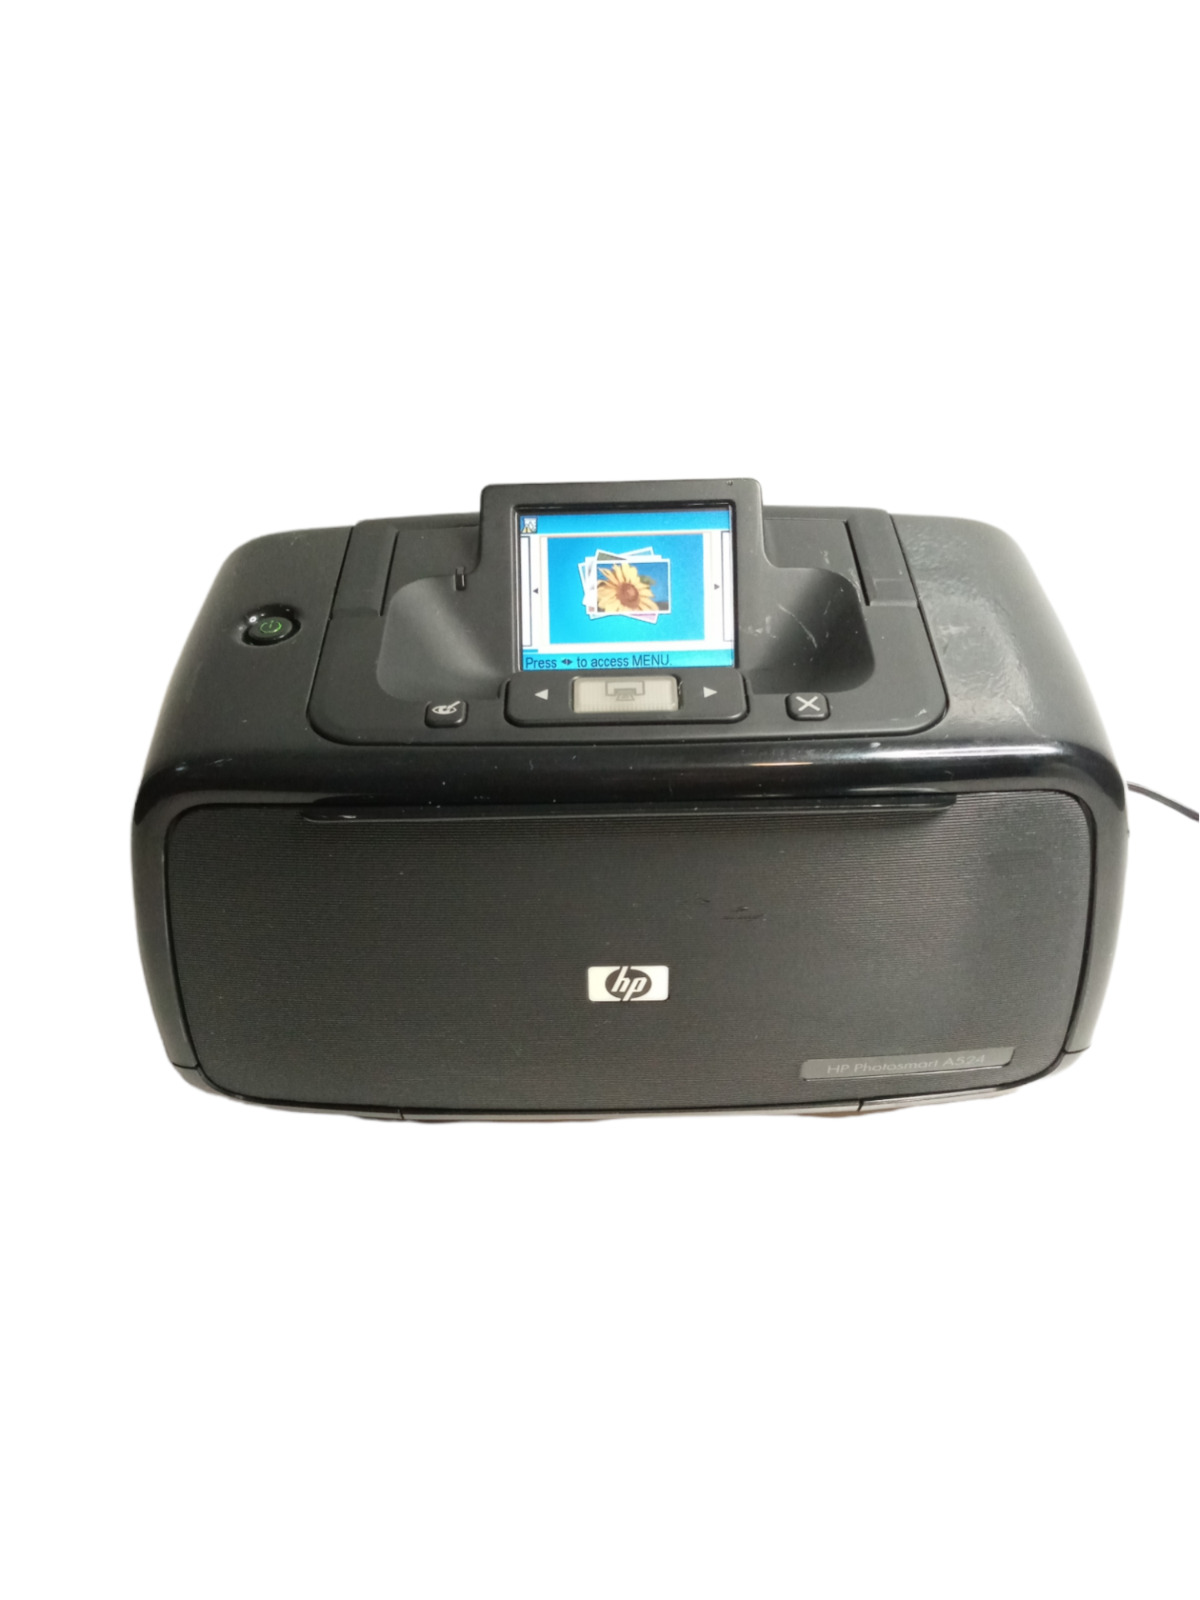 HP Photosmart A524 Compact Photo Printer. Working  No Ink.